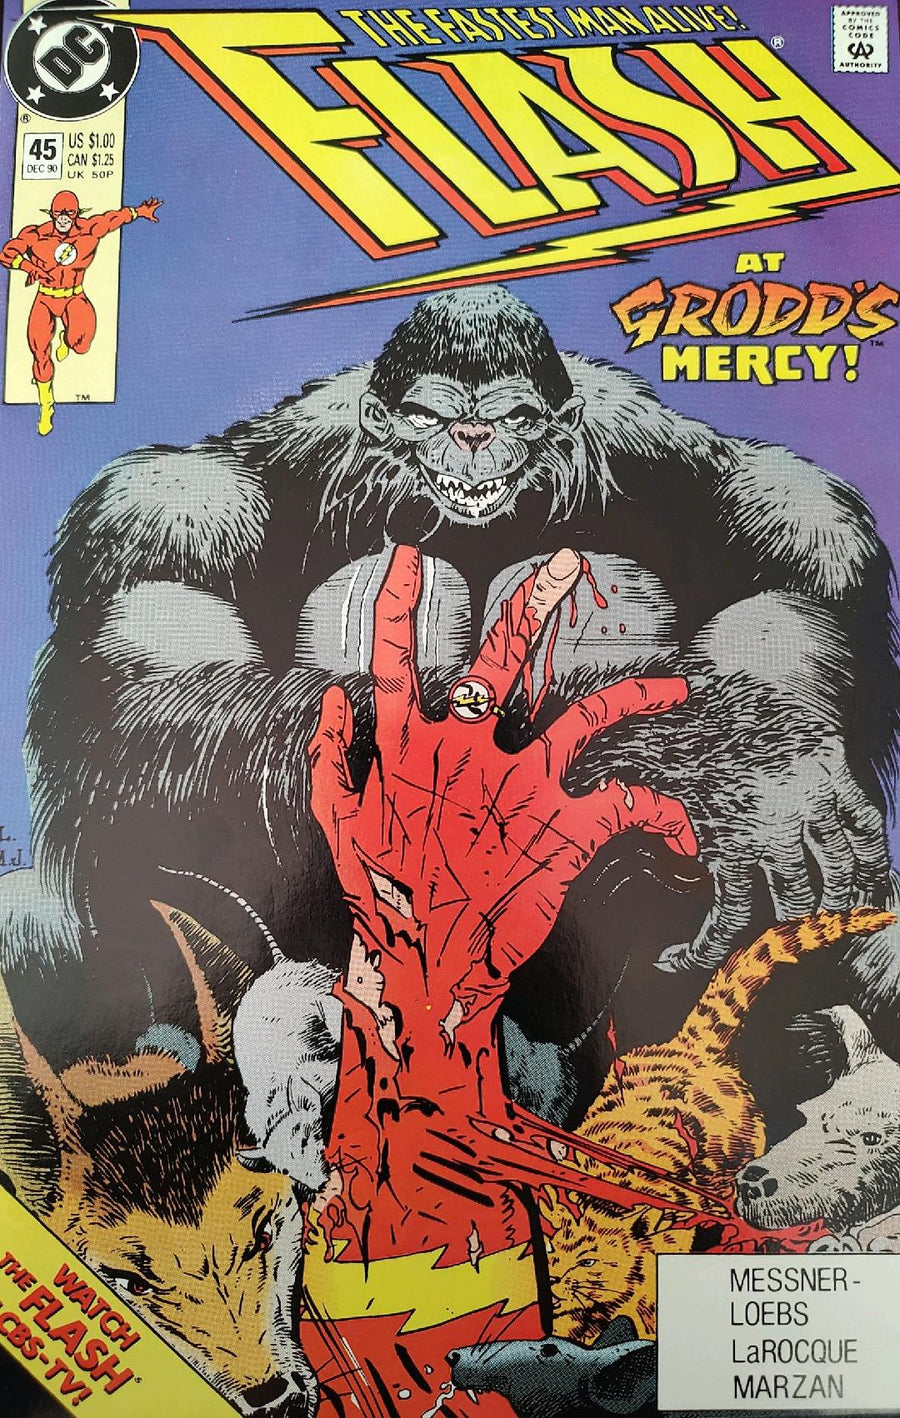 Flash #45 Vol 2 1990 Comic Book Cover